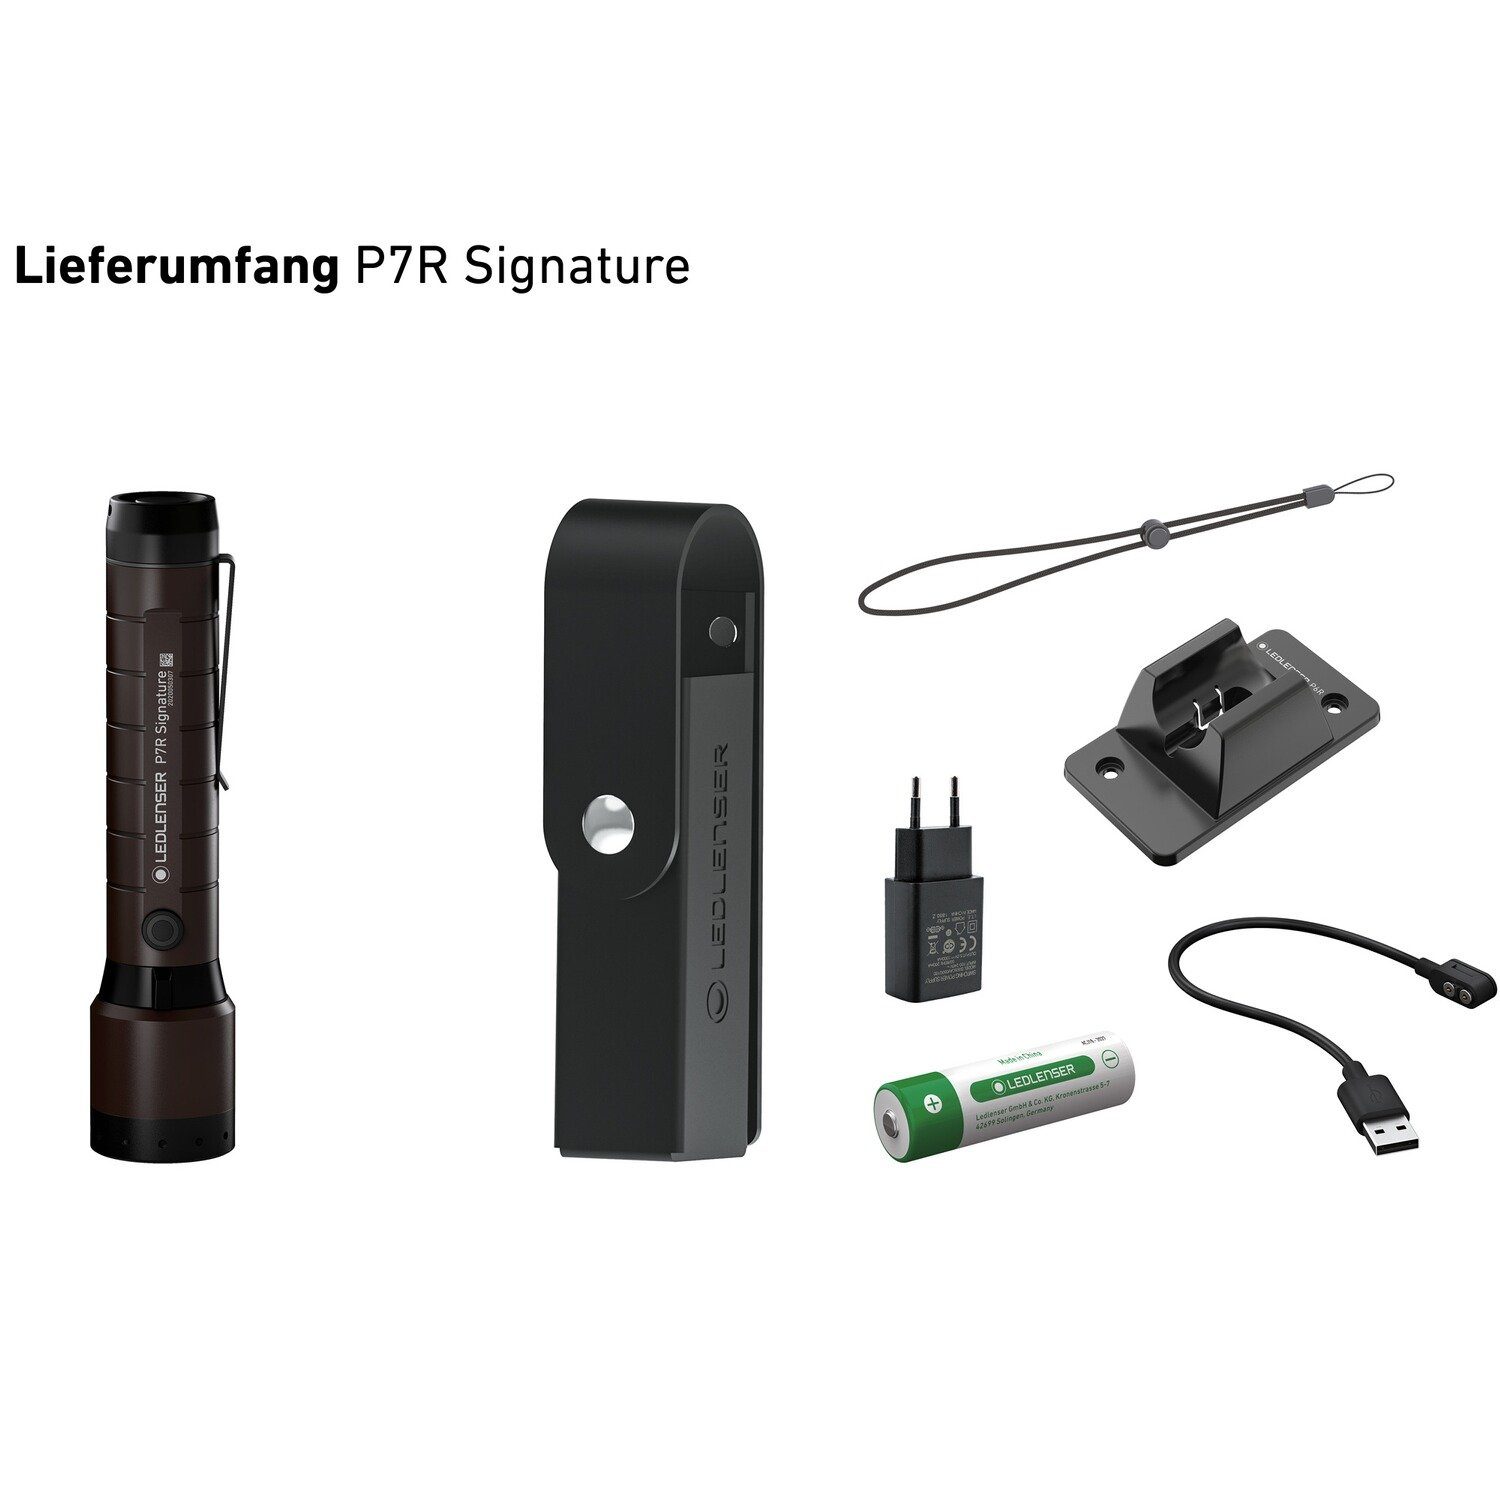 P7R Taschenlampe Ledlenser Signature Lampe